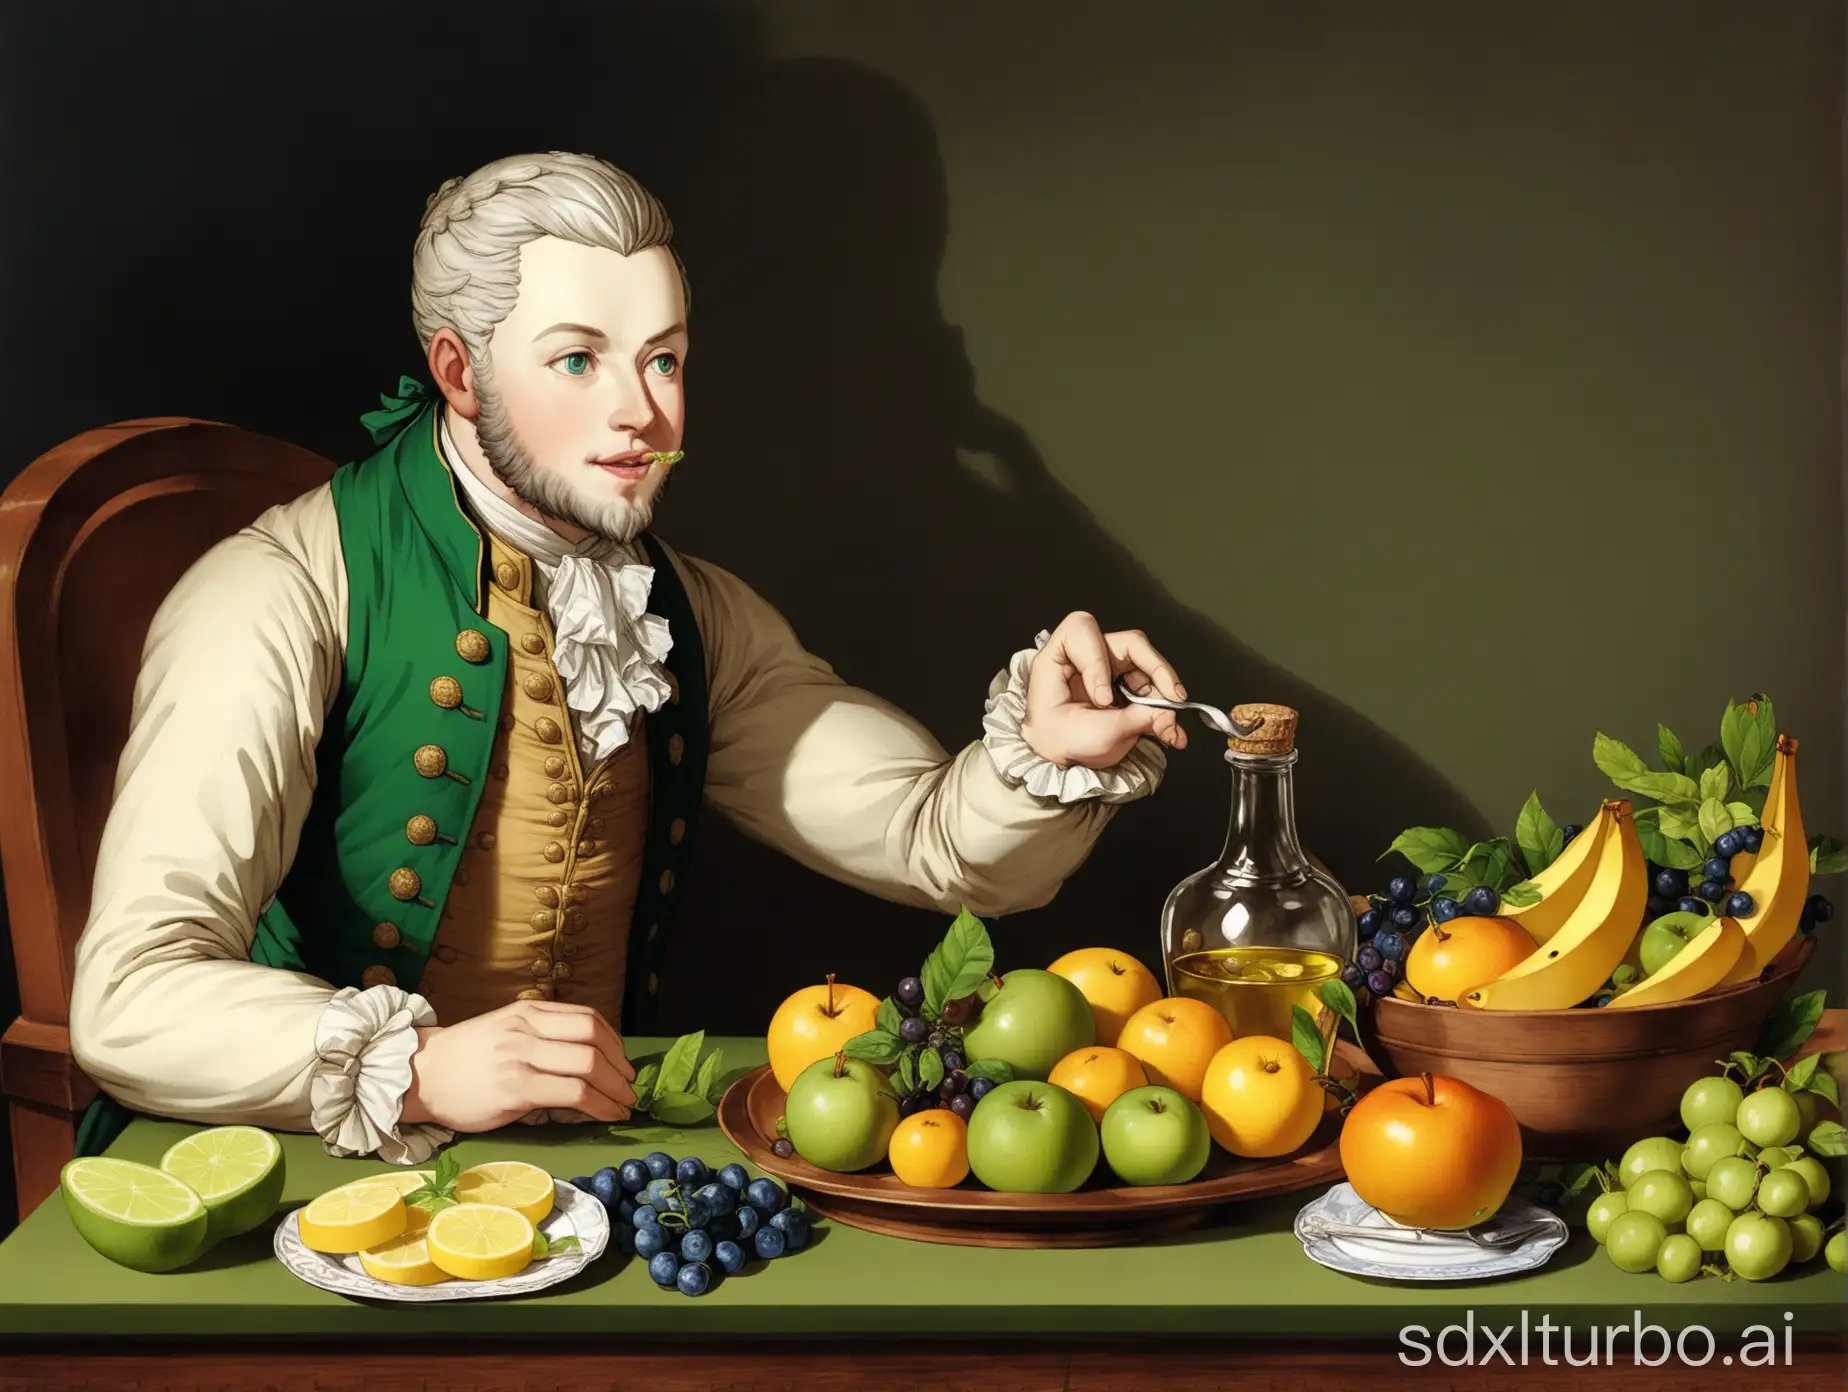 James Lind reaches the conclusion: Proper diet can prevent scurvy